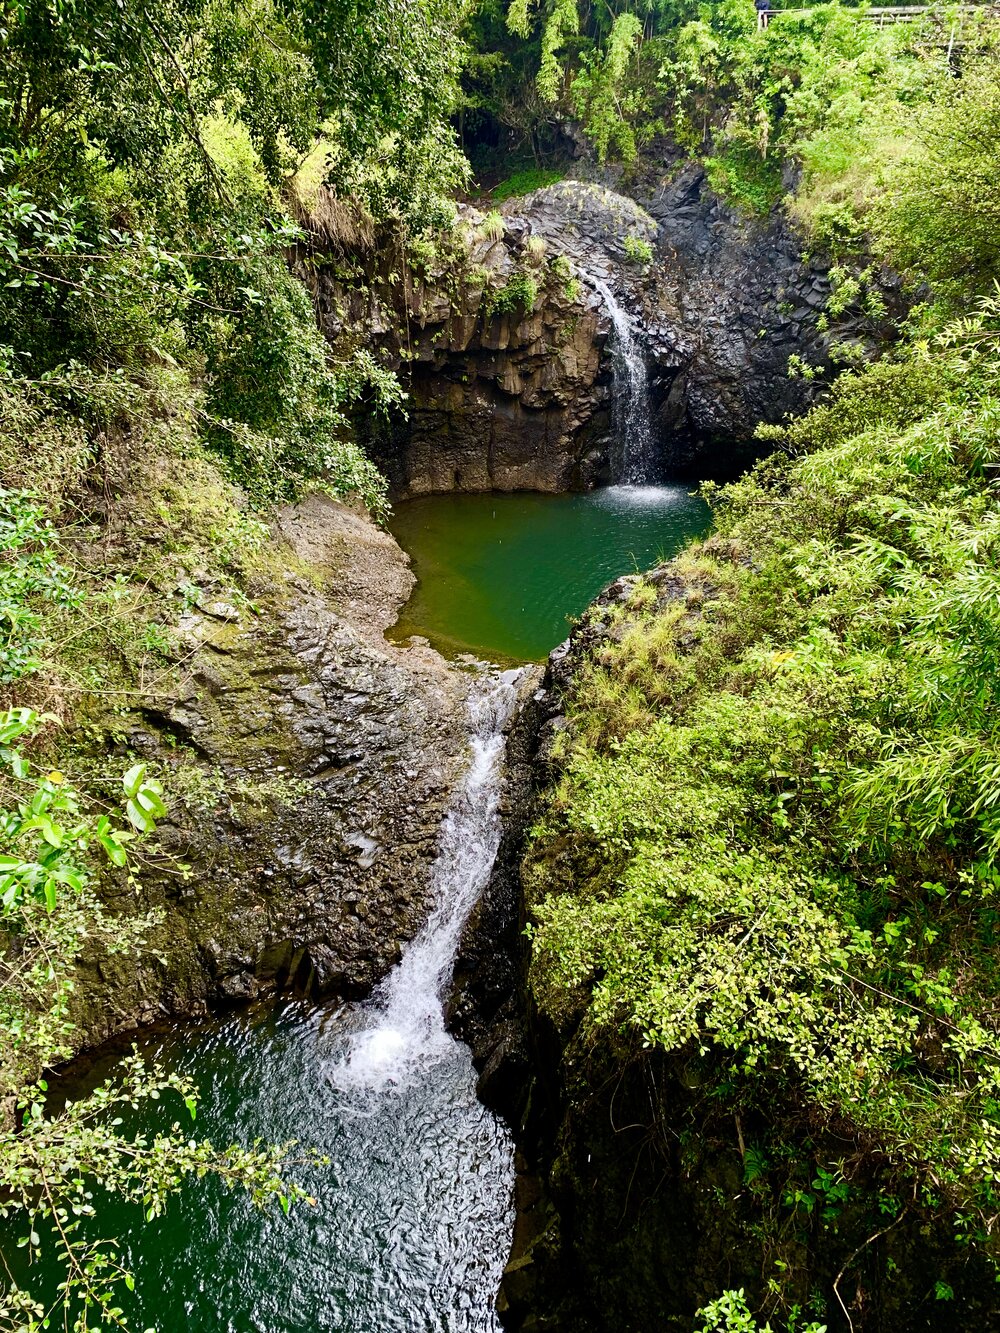 4. Wailua Falls